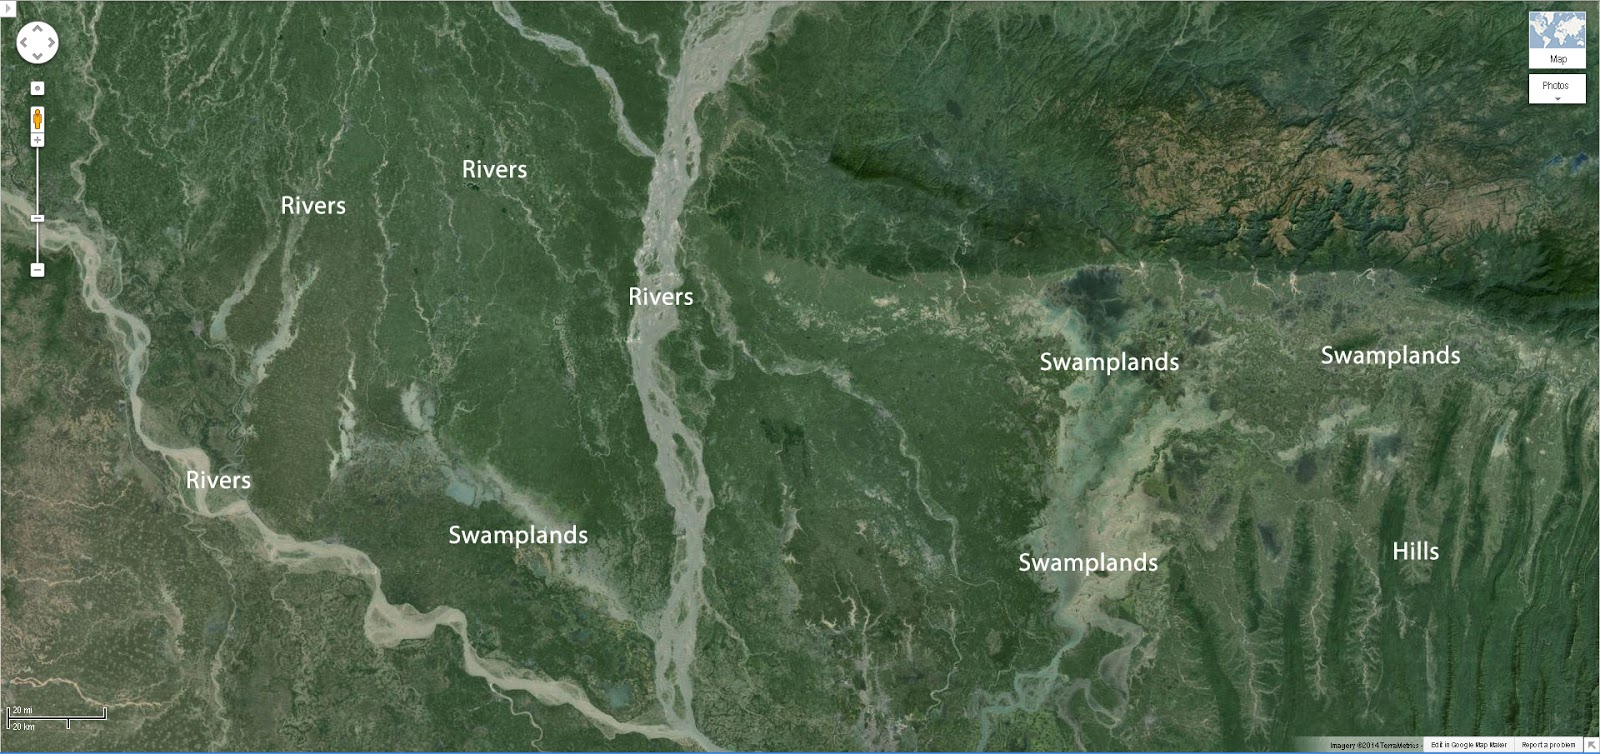 Bangladesh+-+showing+rivers+and+swamps.jpg